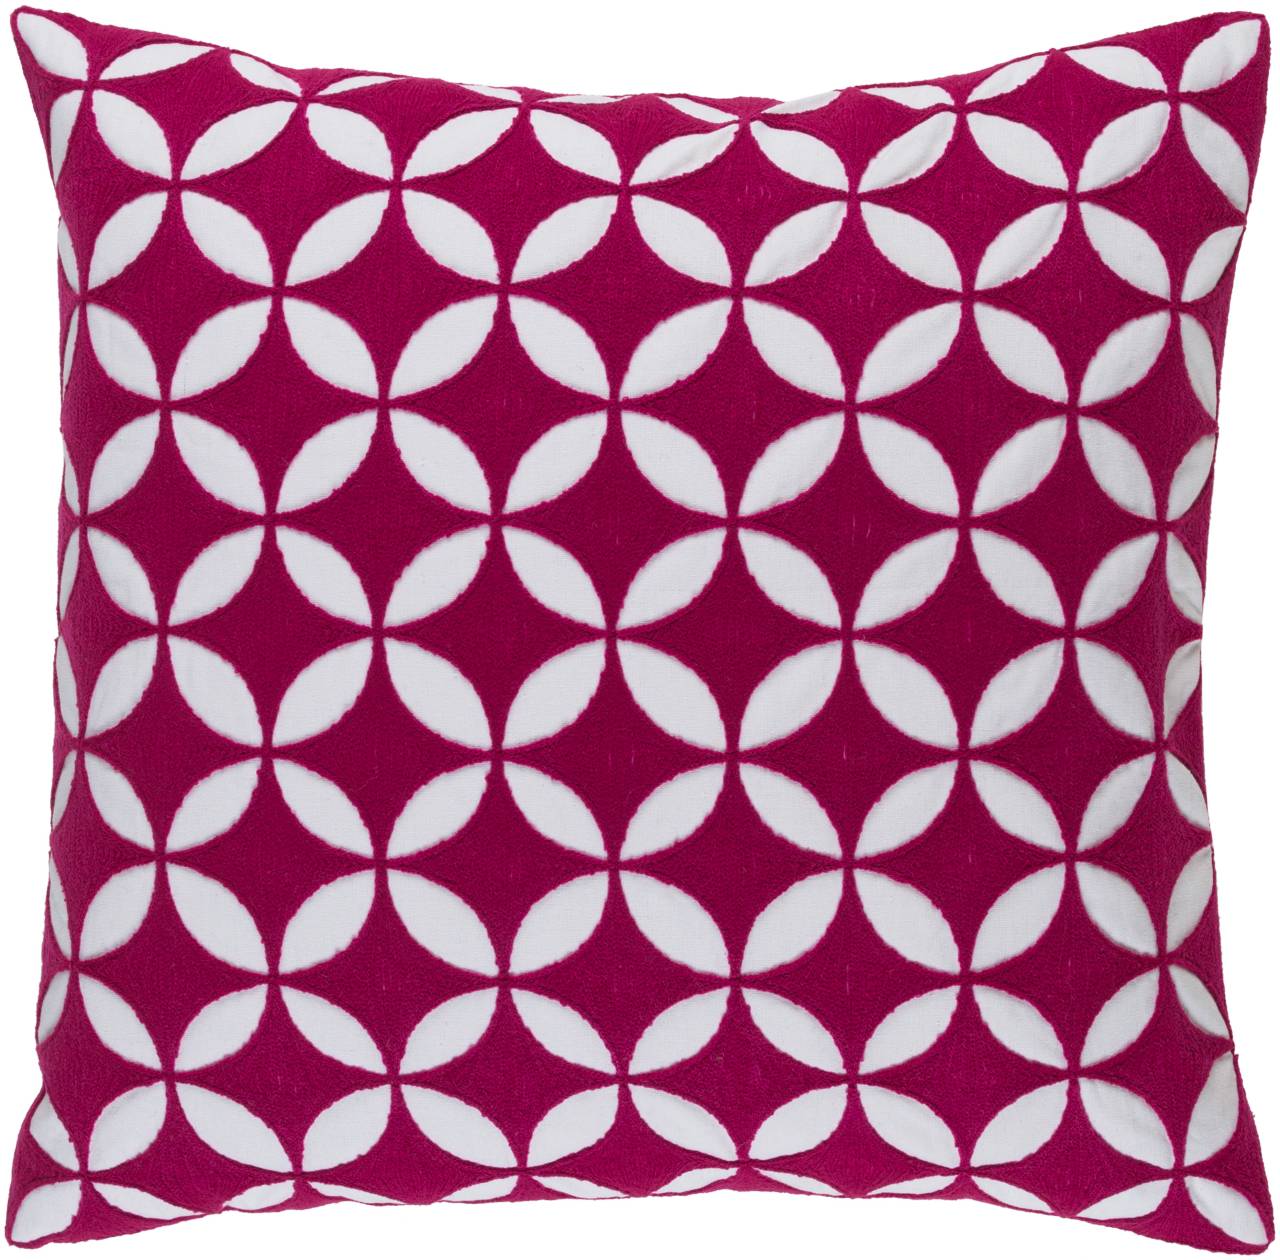 Matena Bright Pink Pillow Cover